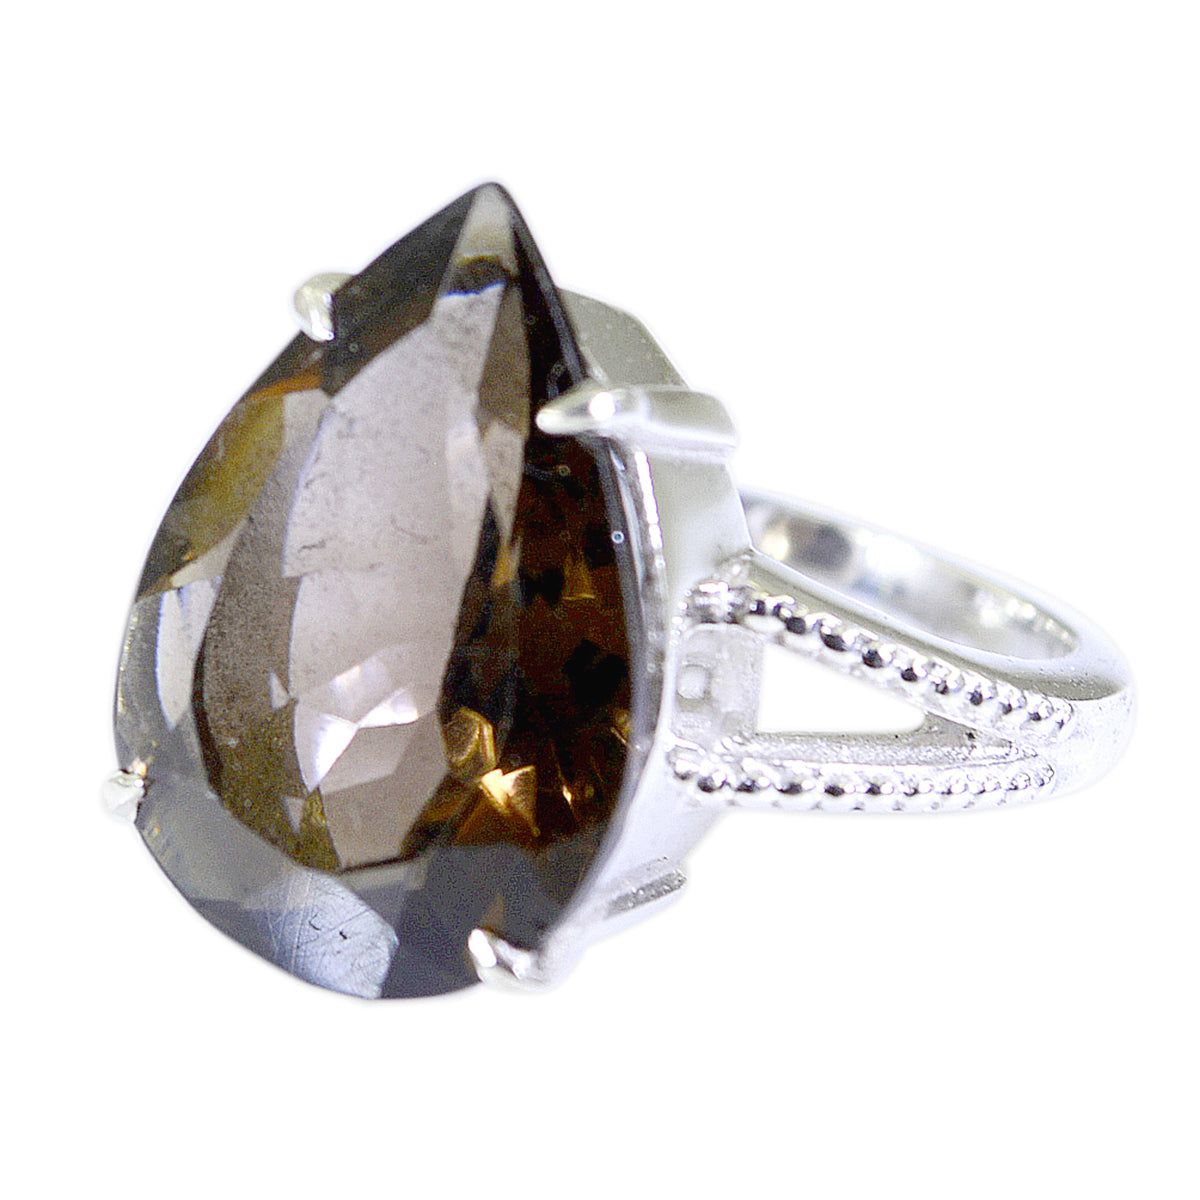 Riyo Fair Gems Smoky Quartz 925 Sterling Silver Ring Man Jewelry